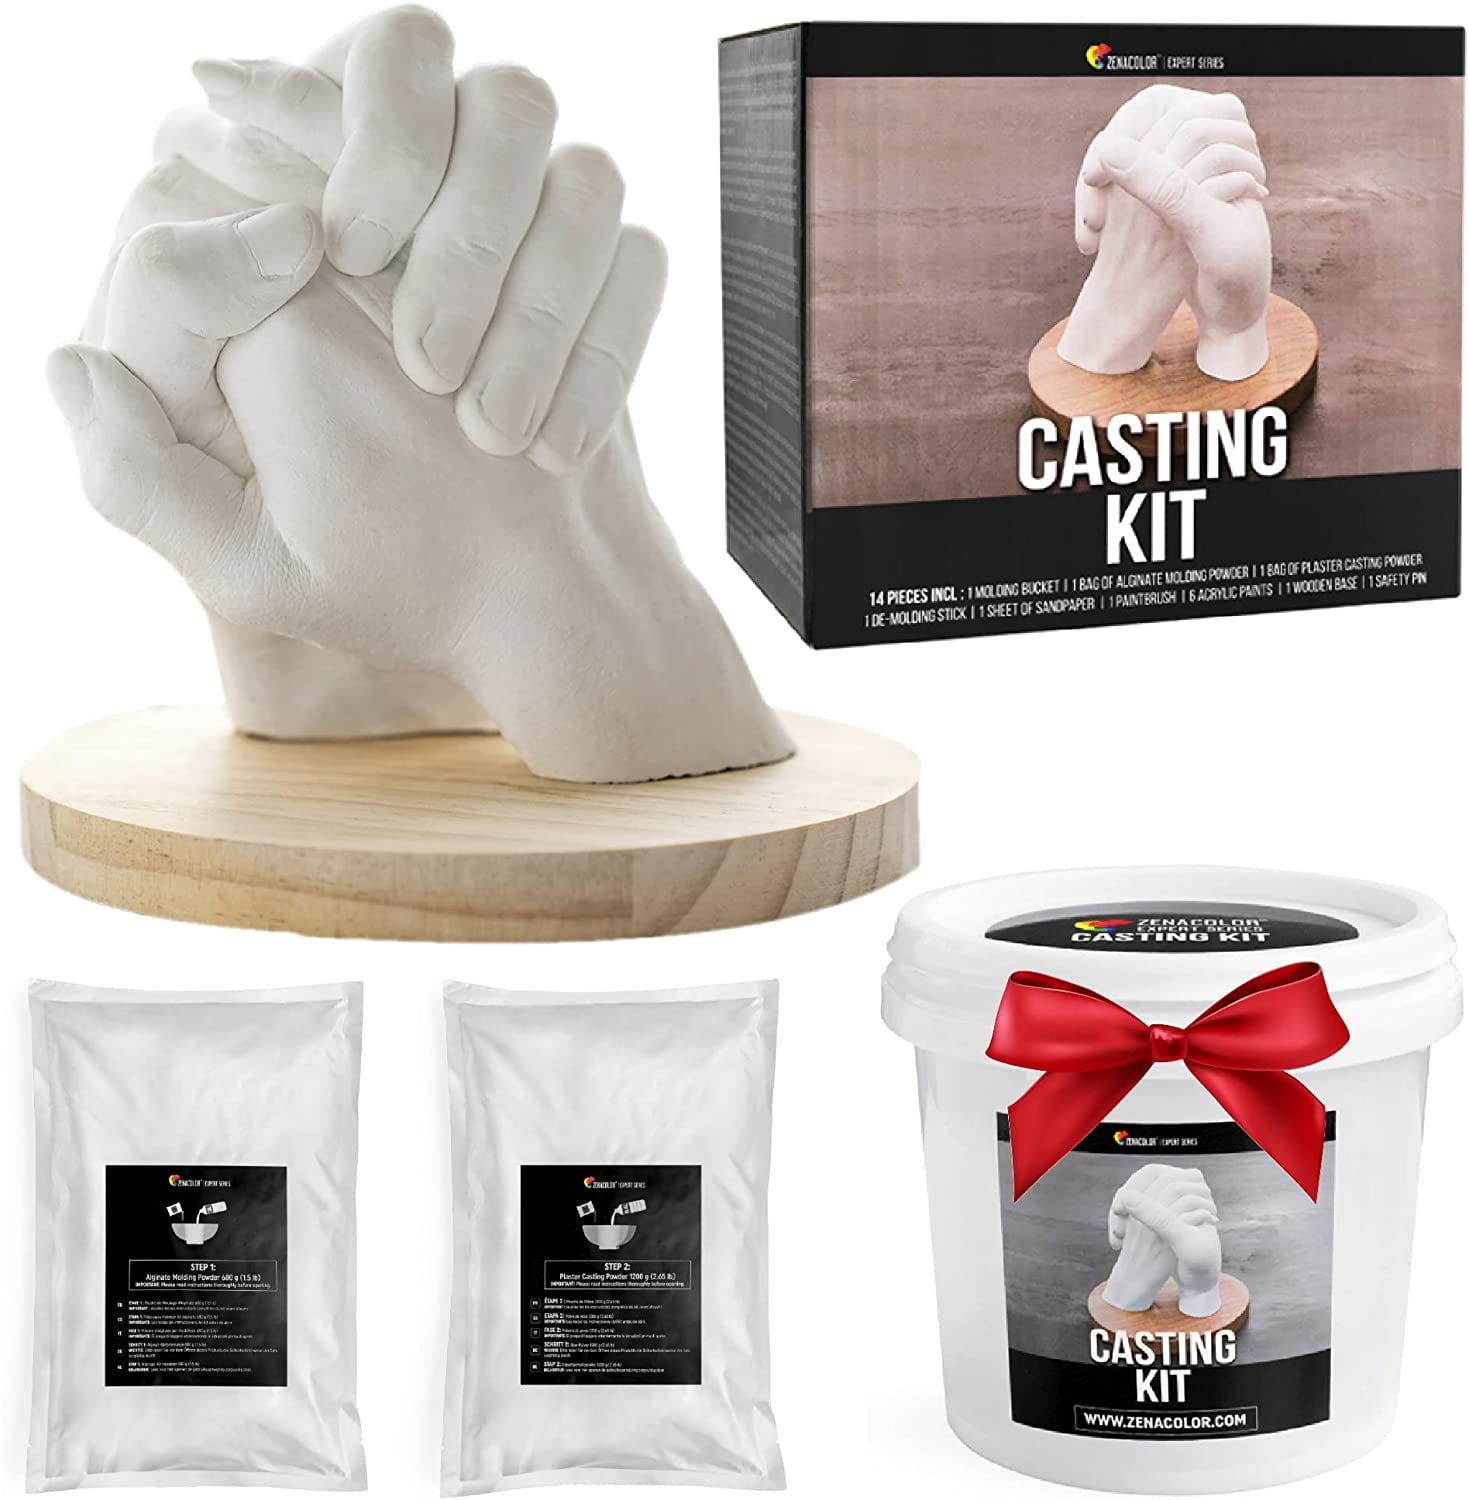  HomeBuddy Hand Casting Kit with Practice Kit - Keepsake Hand  Mold Kit Couples, Plaster Hand Mold Casting Kit, Clay Hand Molding Kit for  Family, Alginate Molding Powder - Top White Elephant